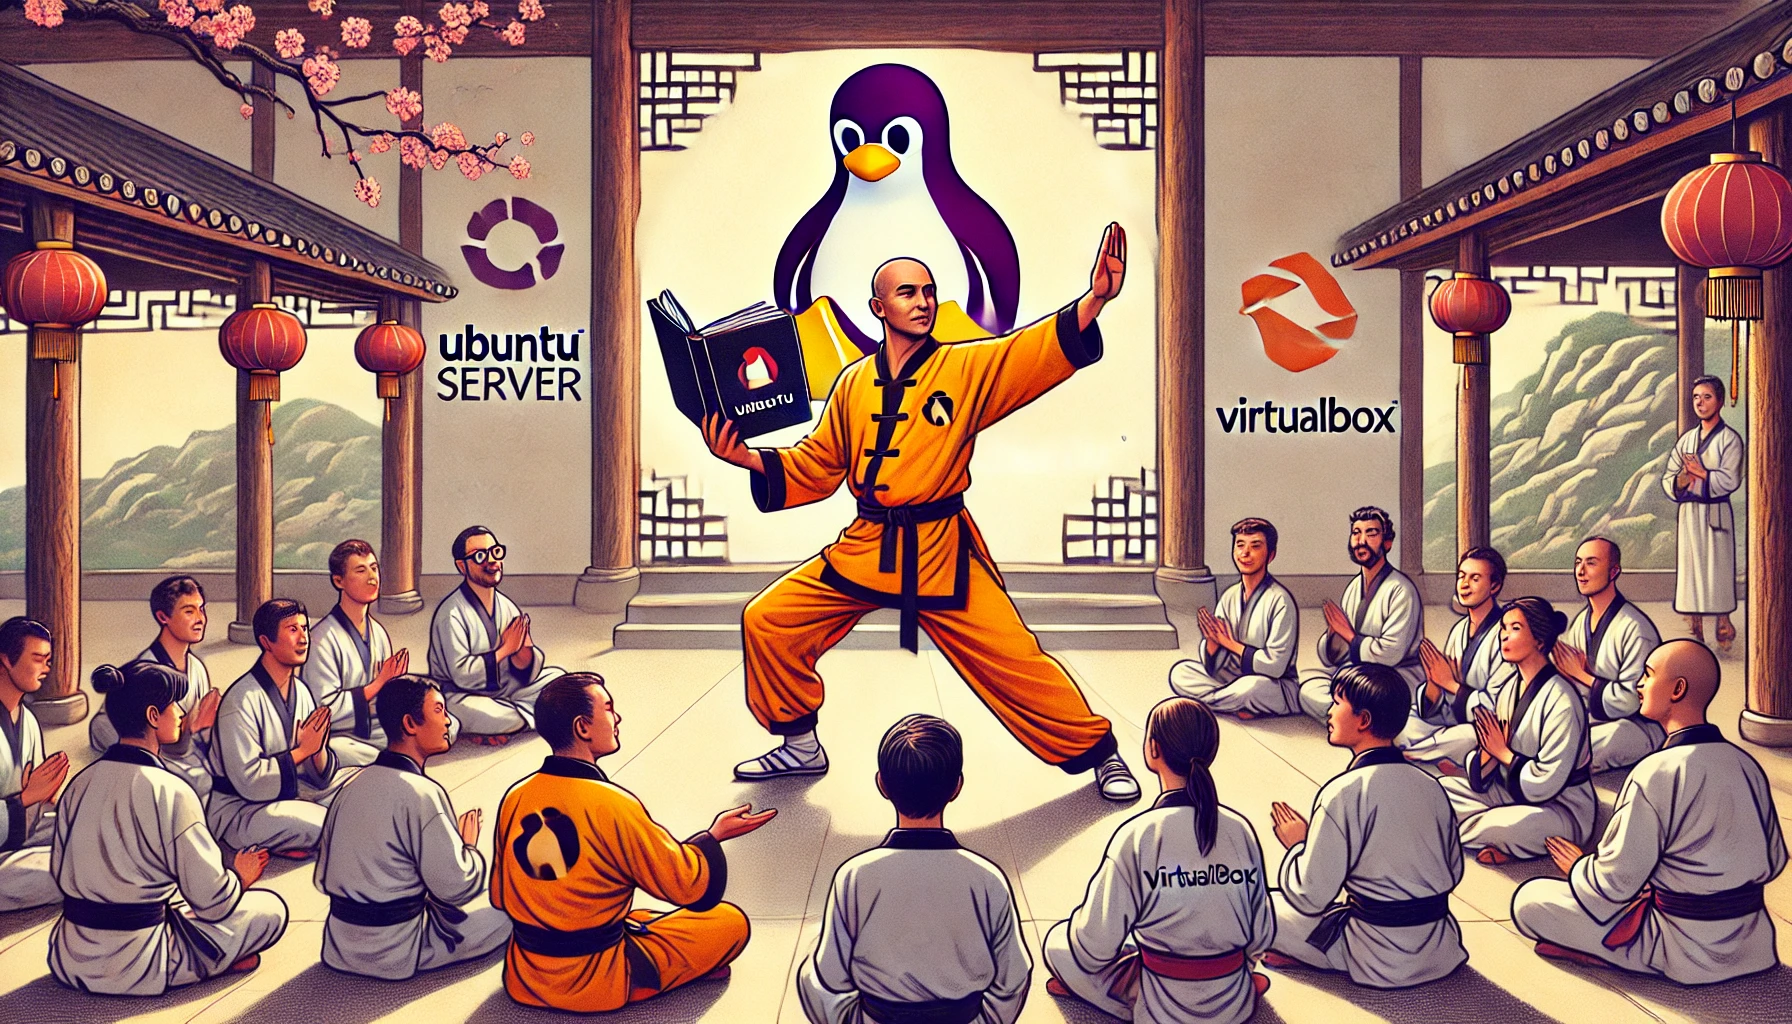 Lesson 1 - Introduction to Ubuntu Server and VirtualBox